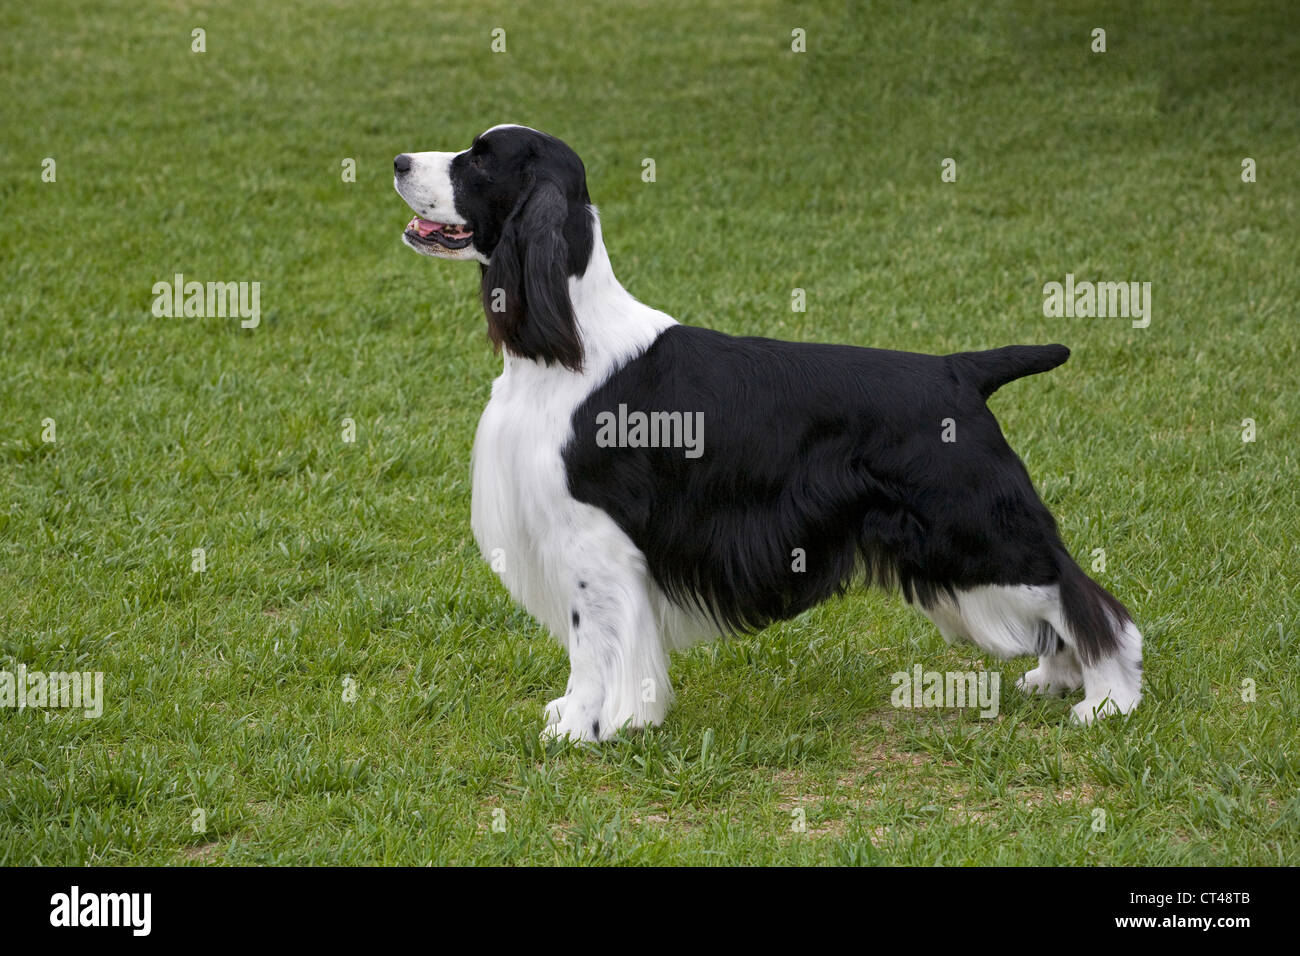 english springer spaniel show dog